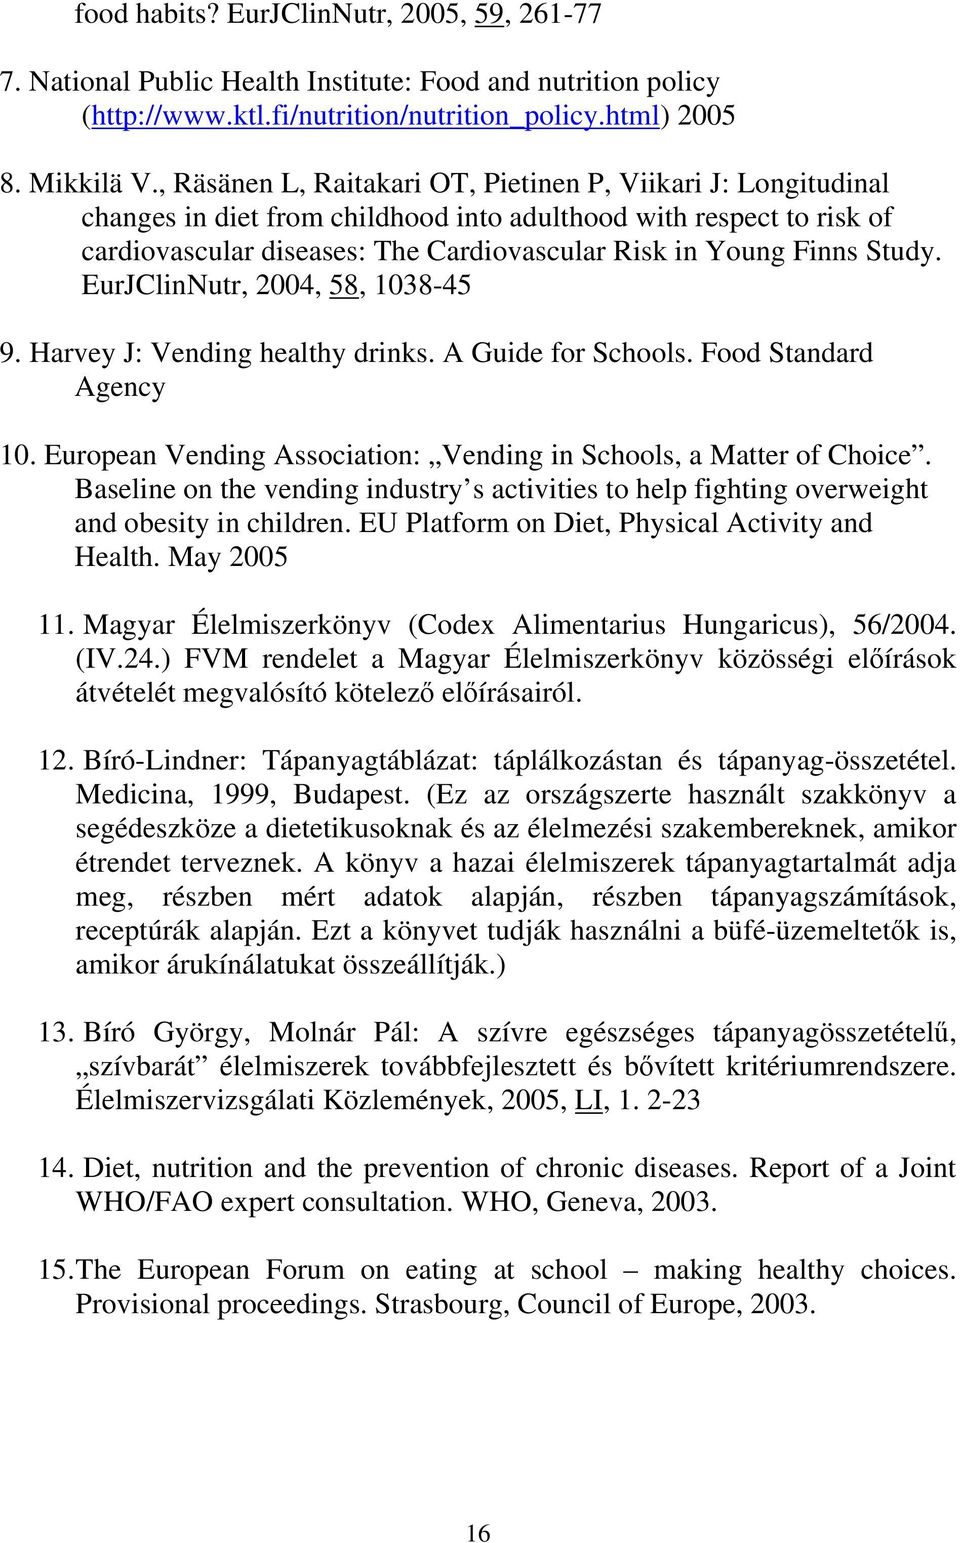 Study. EurJClinNutr, 2004, 58, 1038-45 9. Harvey J: Vending healthy drinks. A Guide for Schools. Food Standard Agency 10. European Vending Association: Vending in Schools, a Matter of Choice.